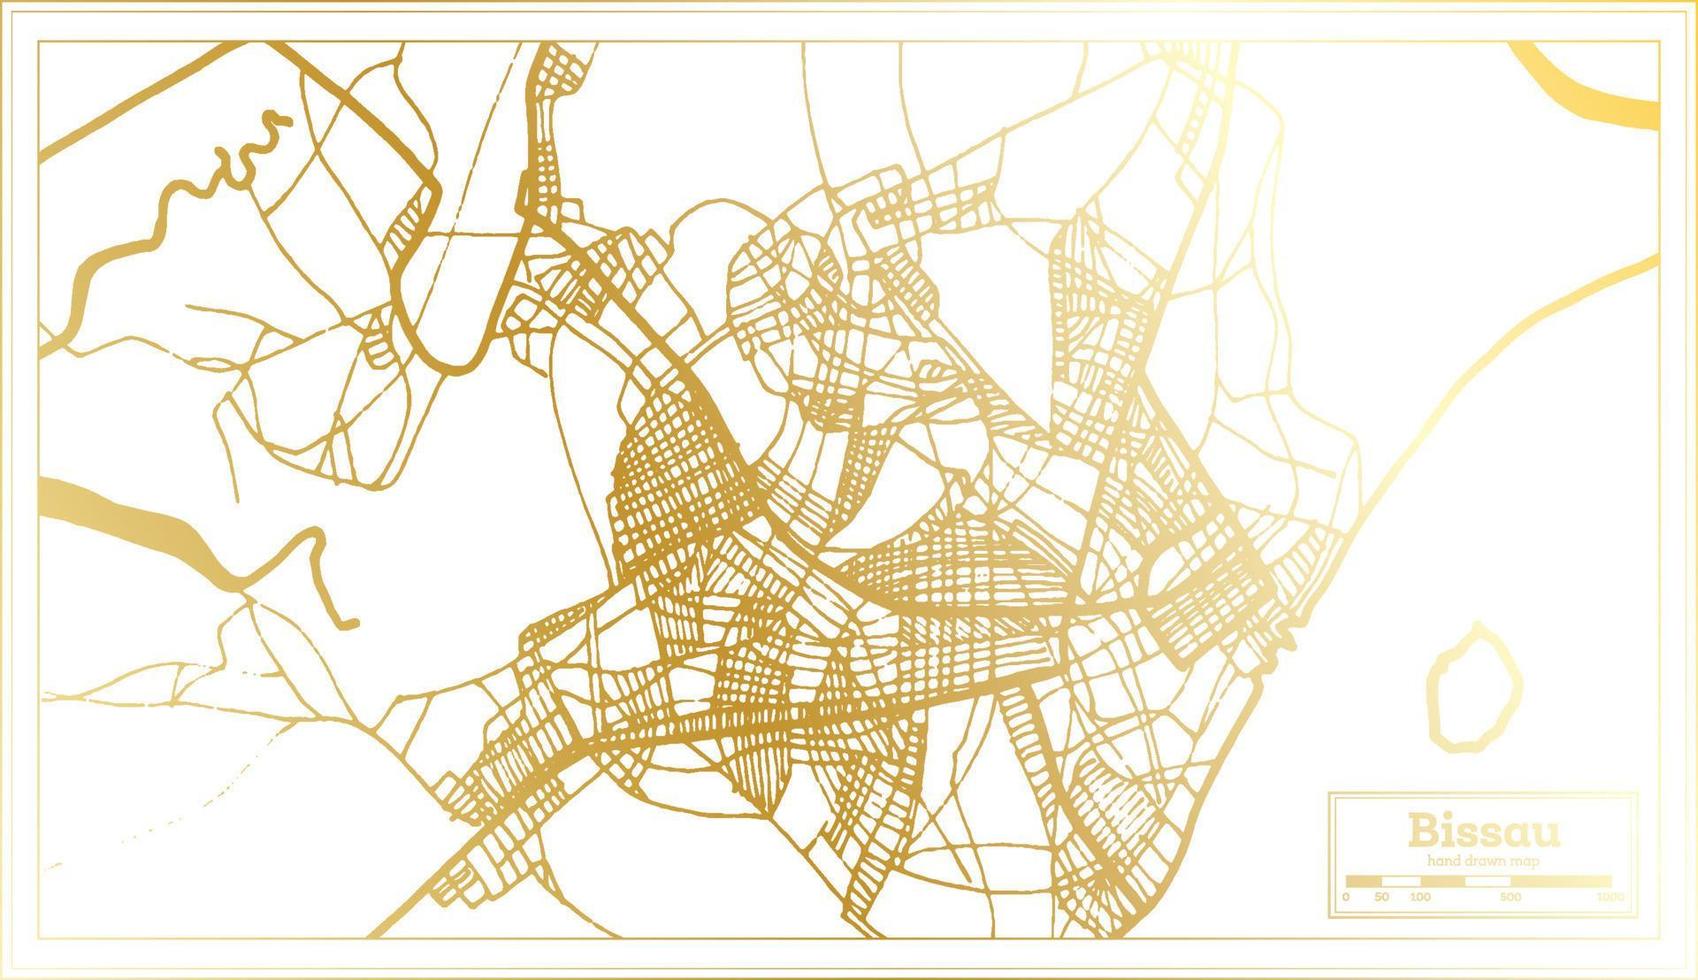 bissau republik av guinea-bissau stad Karta i retro stil i gyllene Färg. översikt Karta. vektor